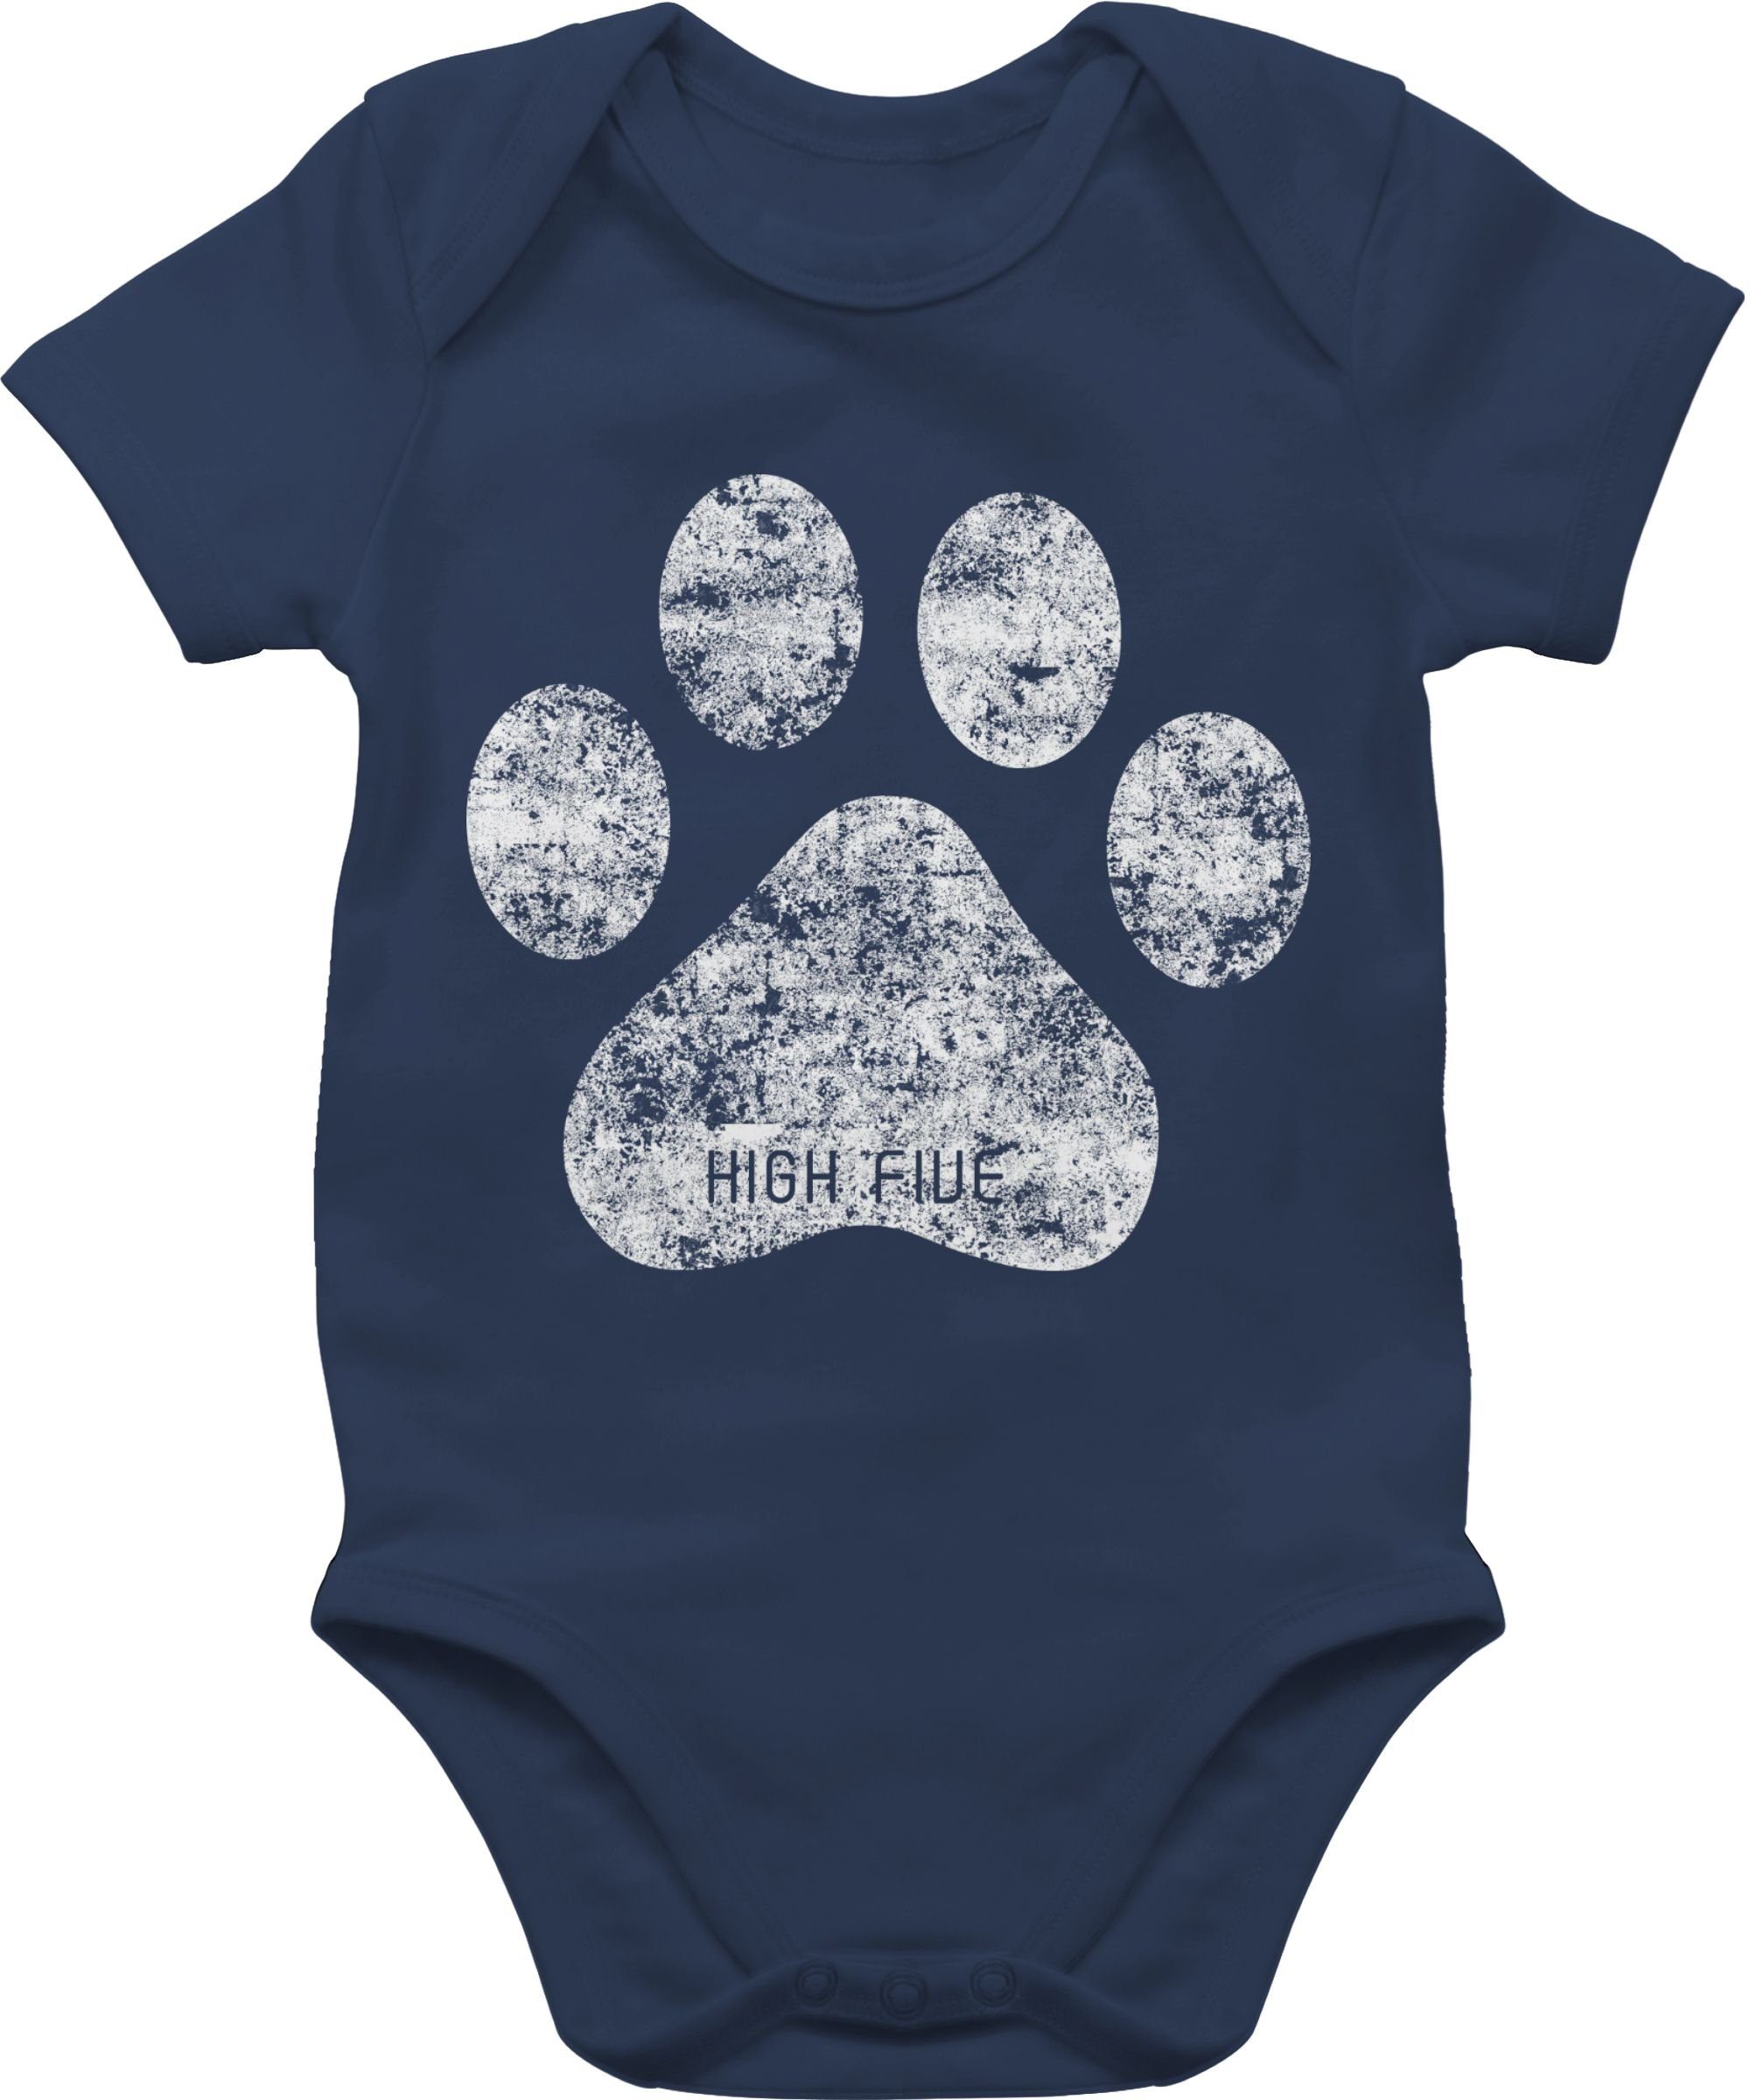 Shirtracer Shirtbody High Five Hunde Pfote Tiermotiv Animal Print Baby 2 Navy Blau